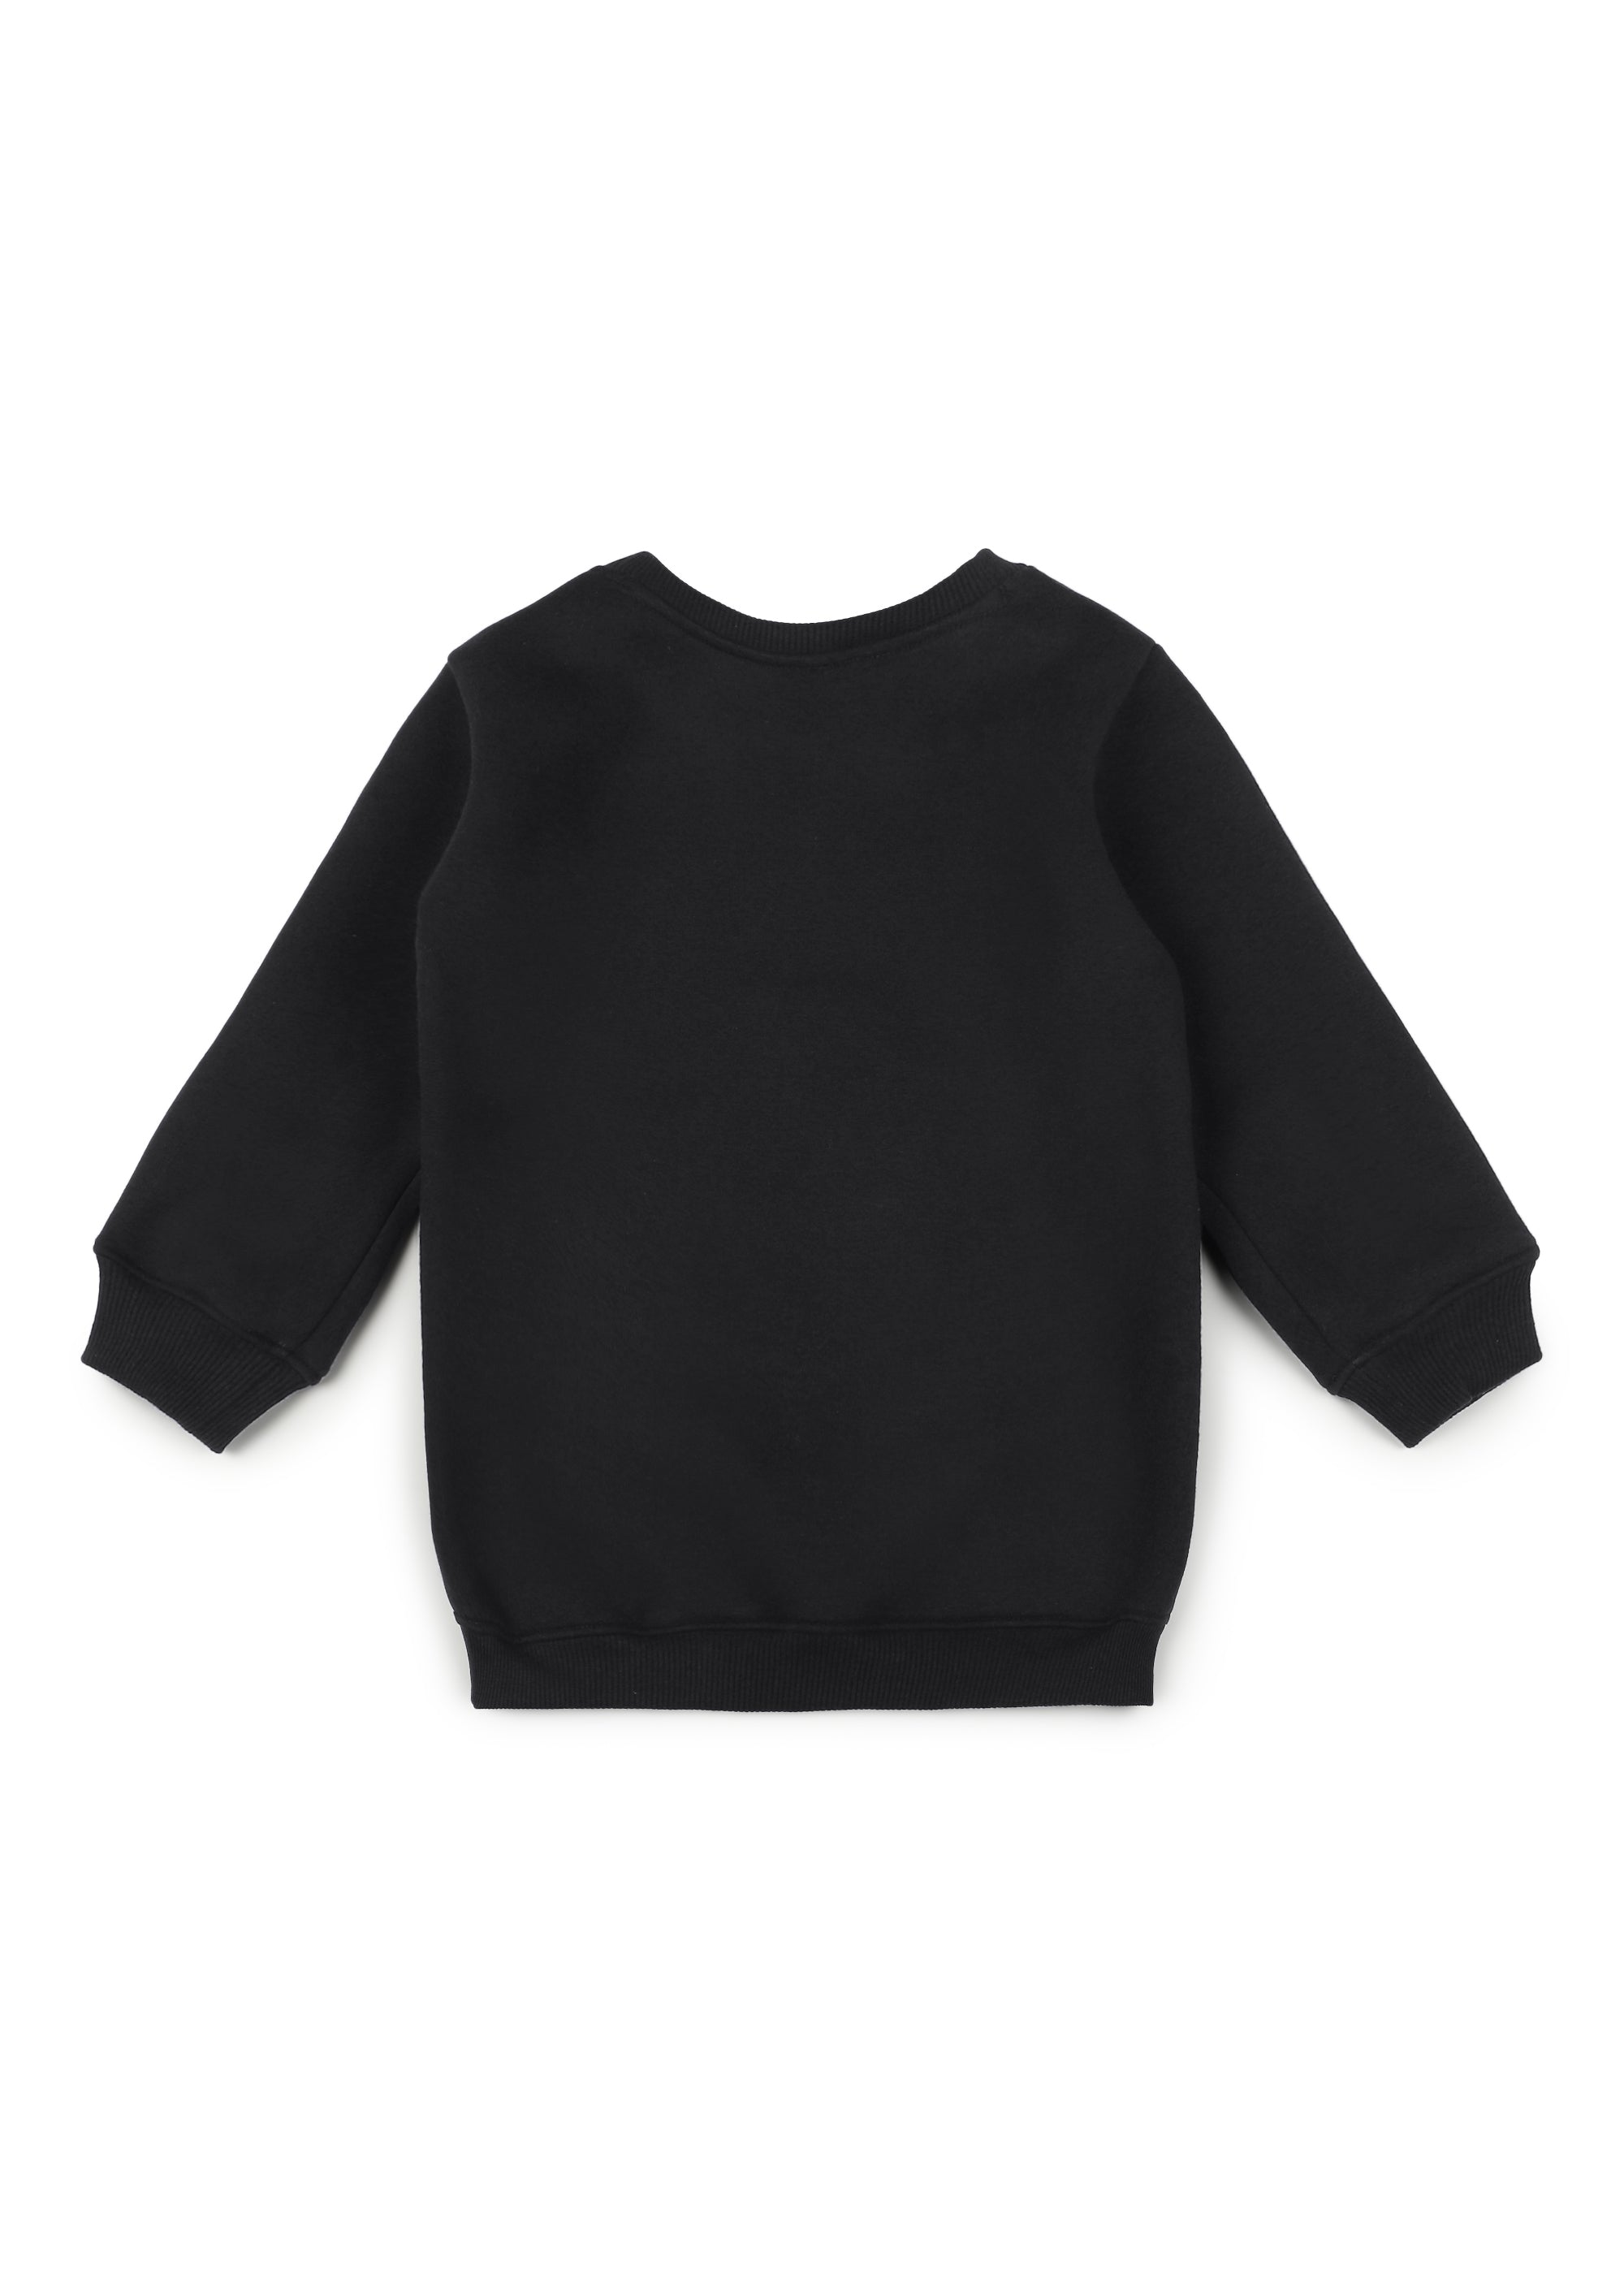 Peppa Good Night Print Cotton Fleece Kids Sweatshirt Set - Shopbloom